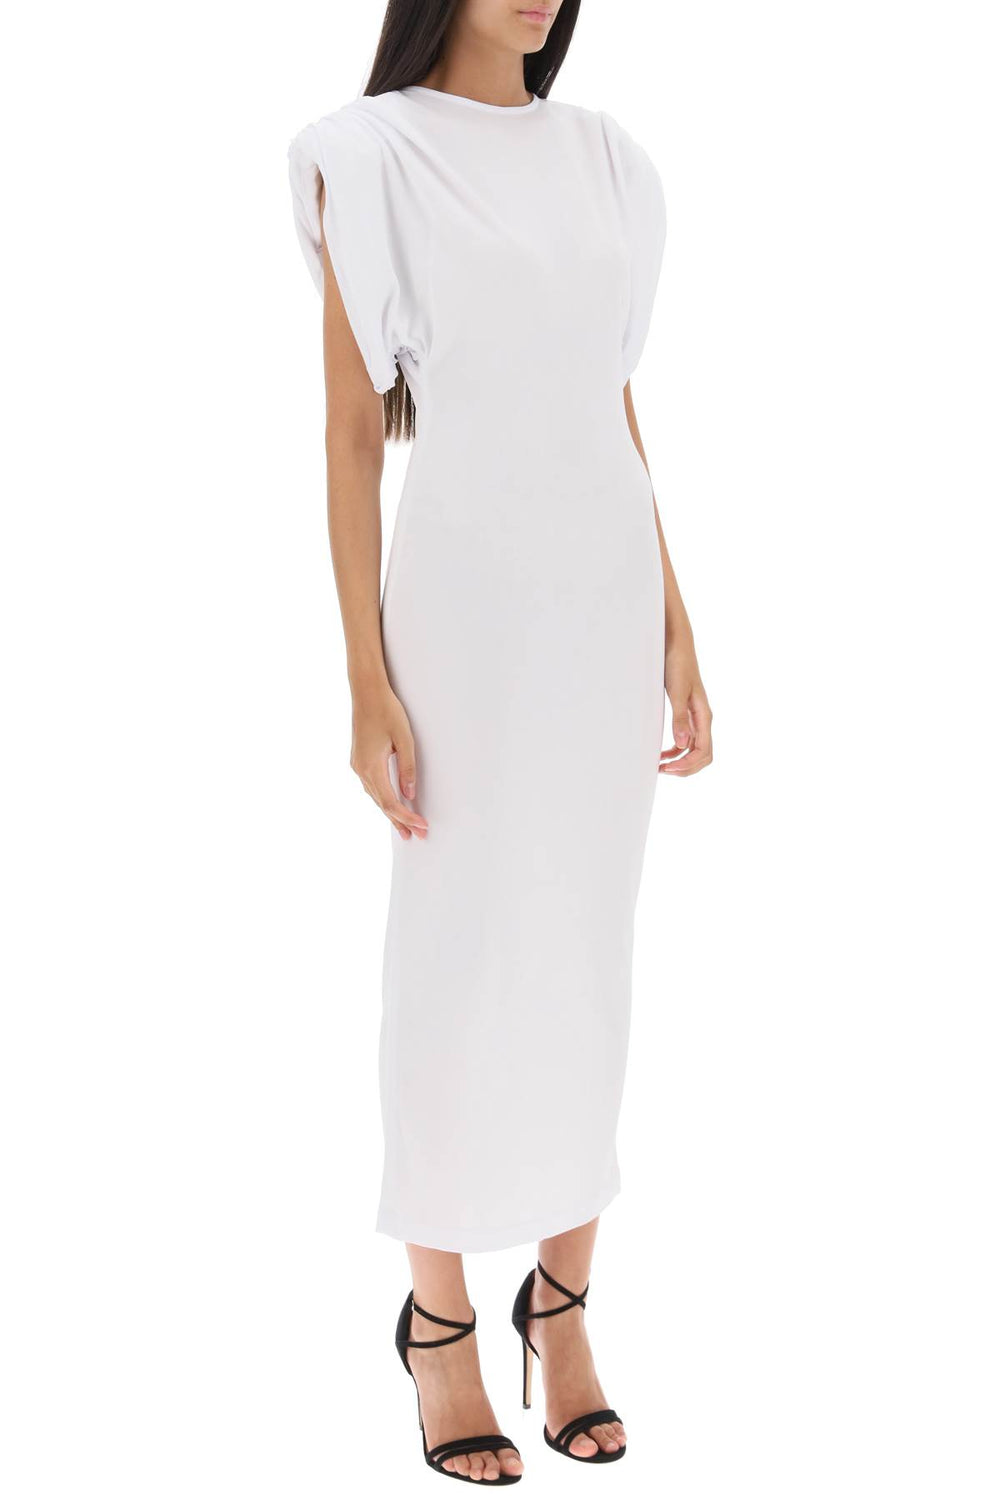 Wardrobe.nyc midi sheath dress with structured shoulders-1